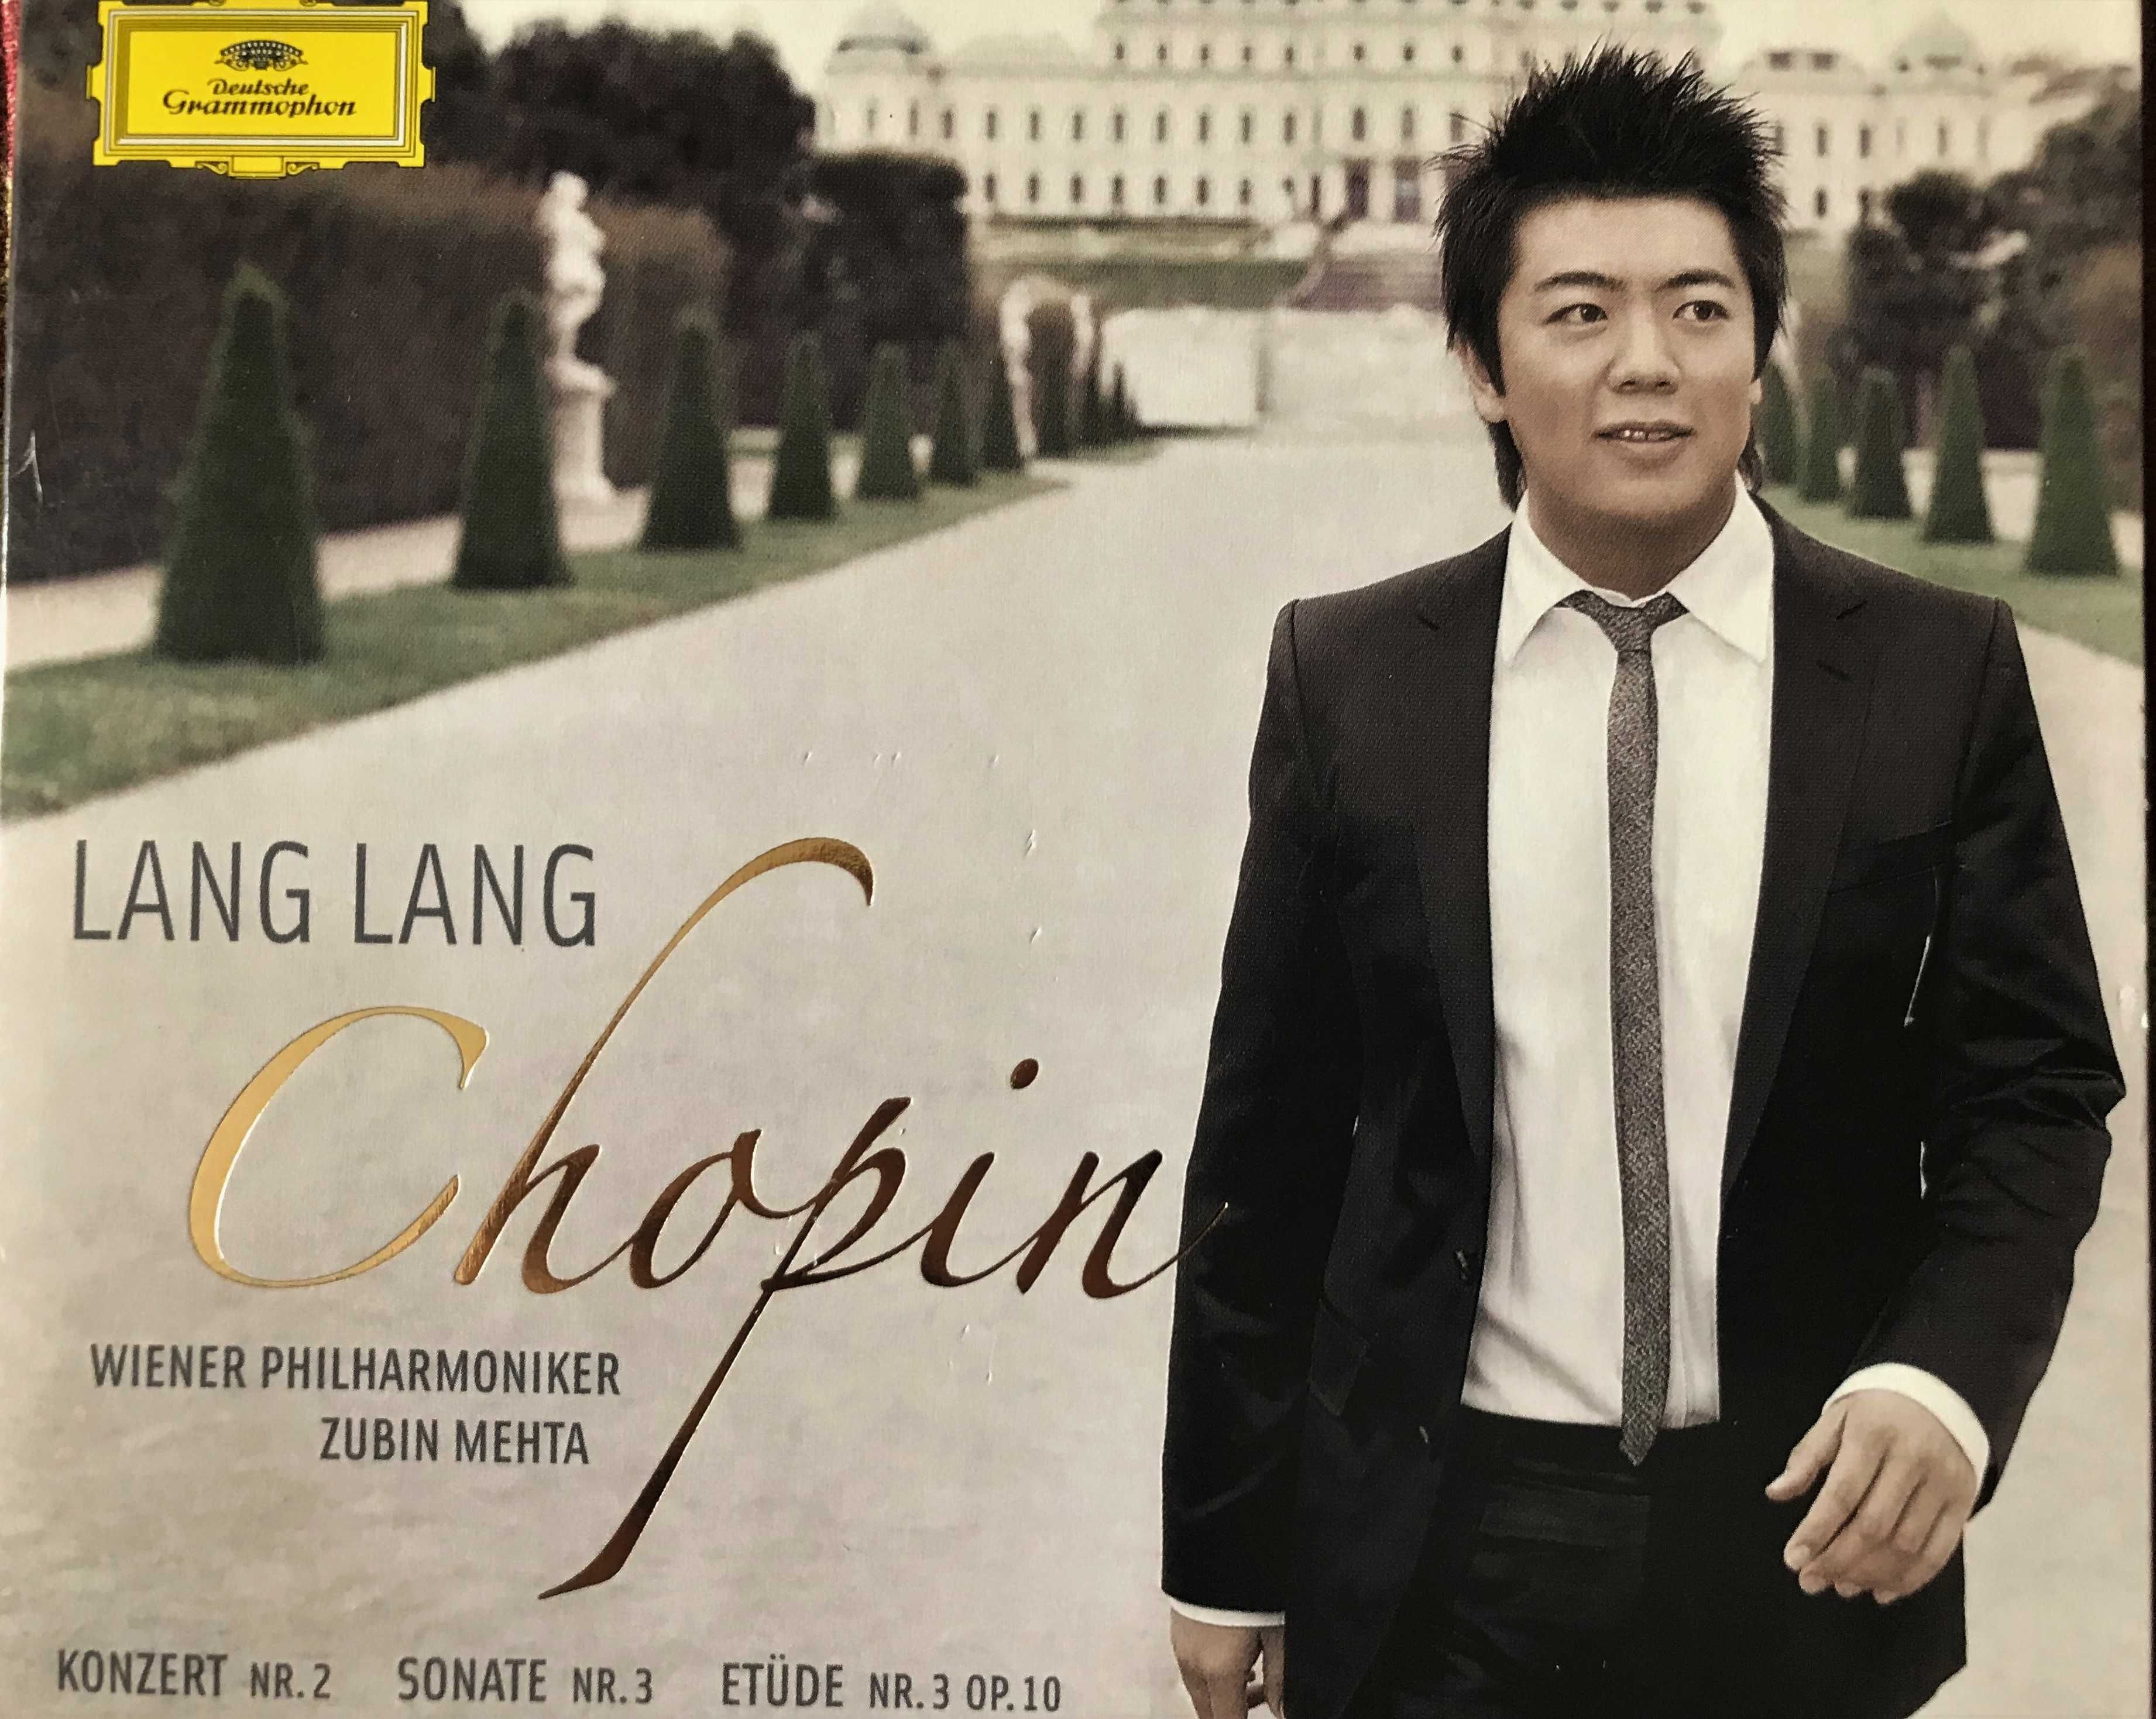 Lang Lang, Chopin; Wiener Philharmoniker, Zubin Mehta